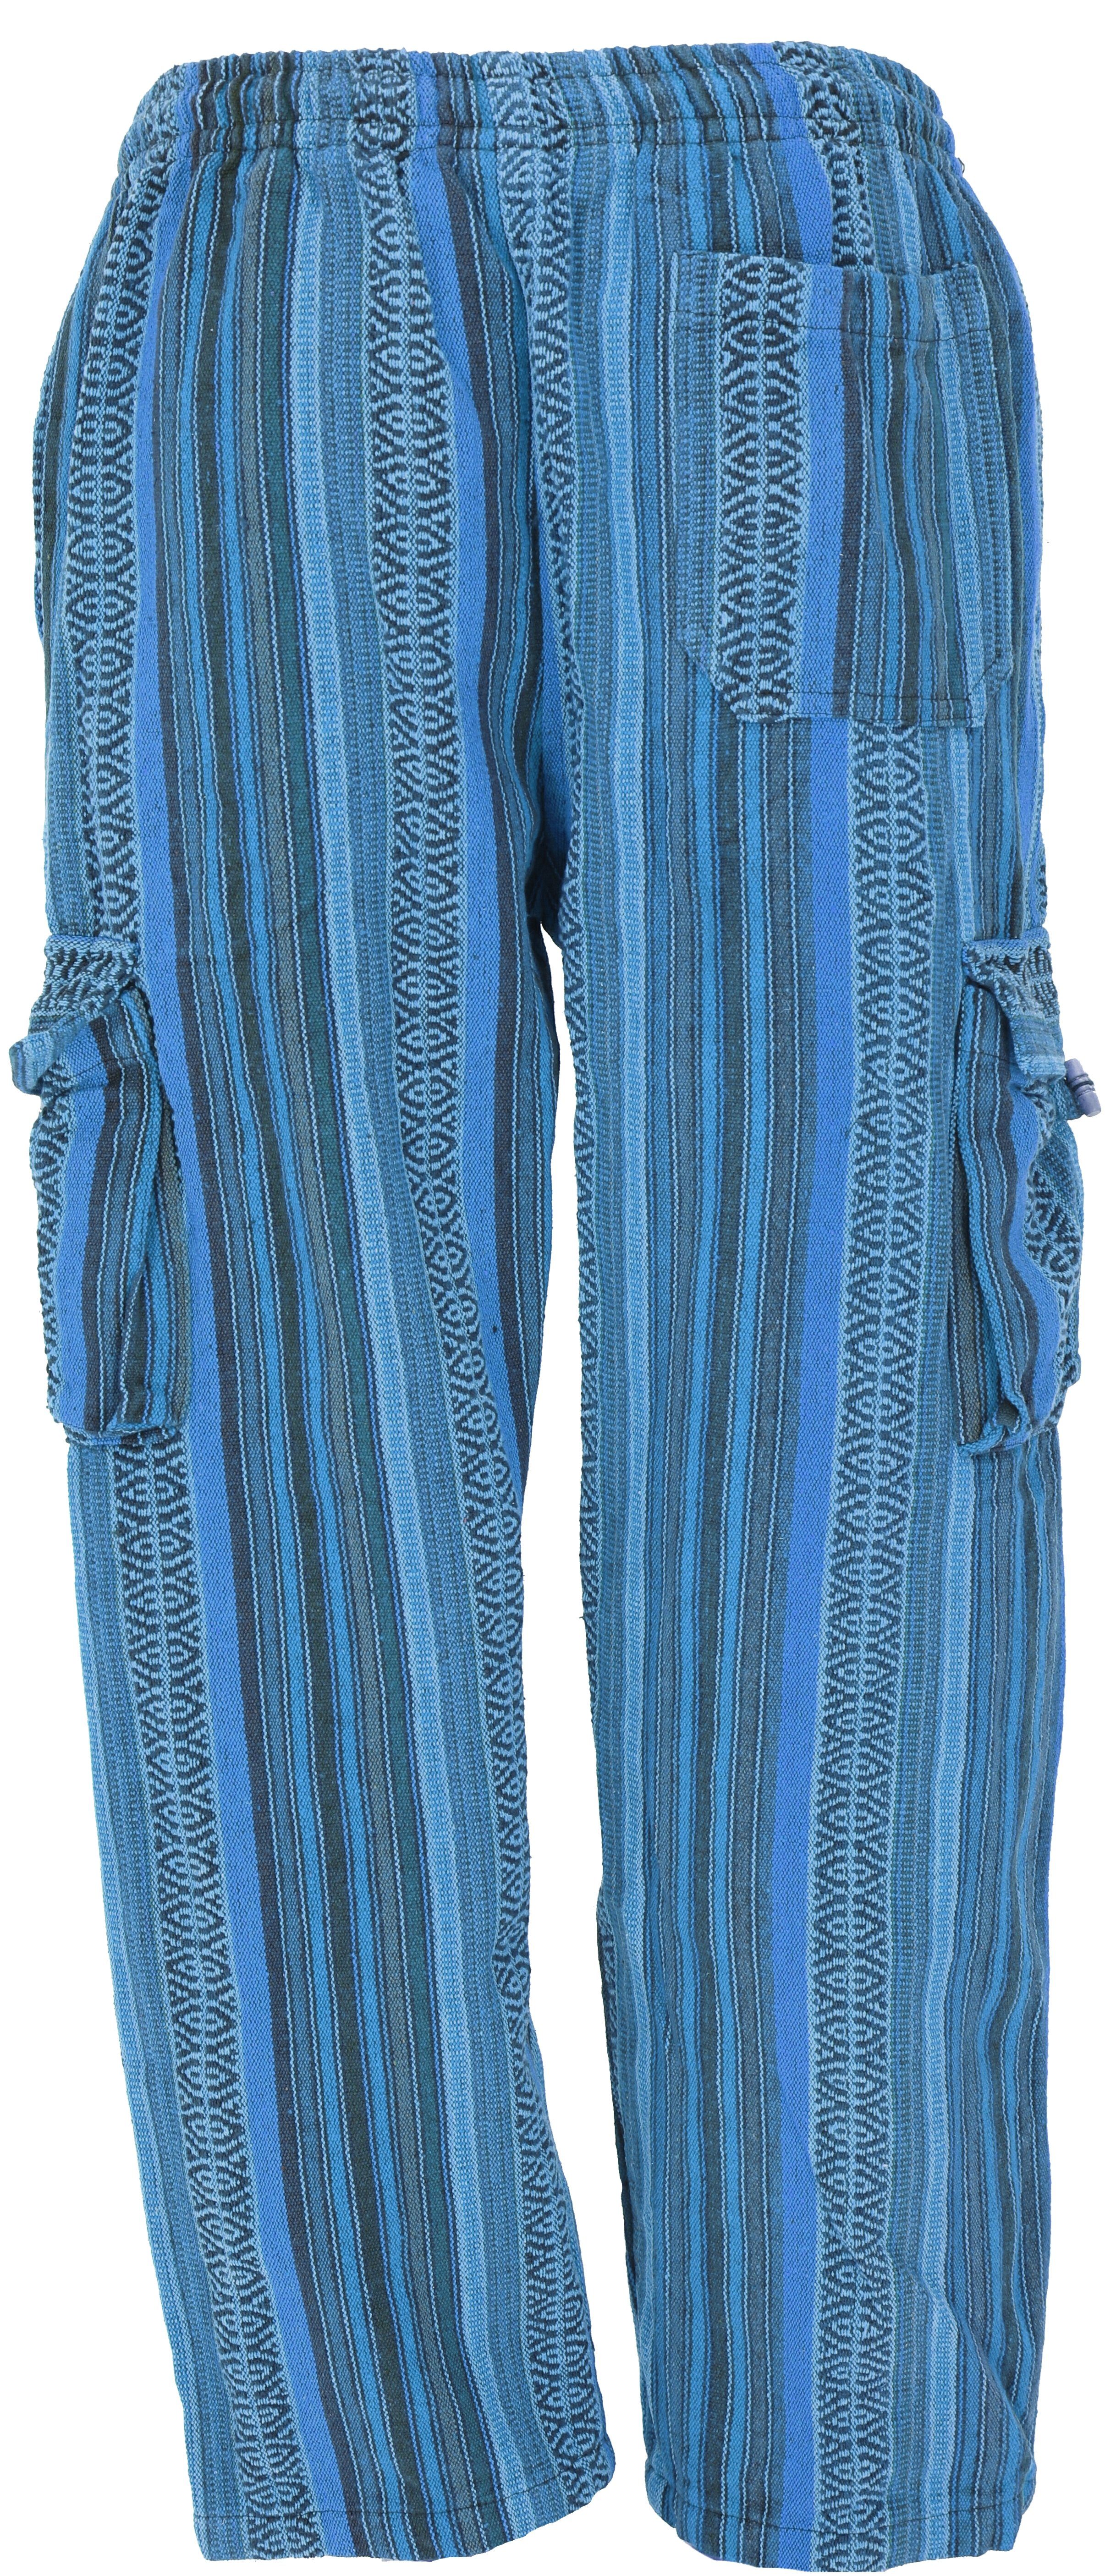 Guru-Shop Hose, alternative - Style, Bekleidung Hippie, Hose Ethno Loose Relaxhose Goa Wohlfühlhose, blau fit